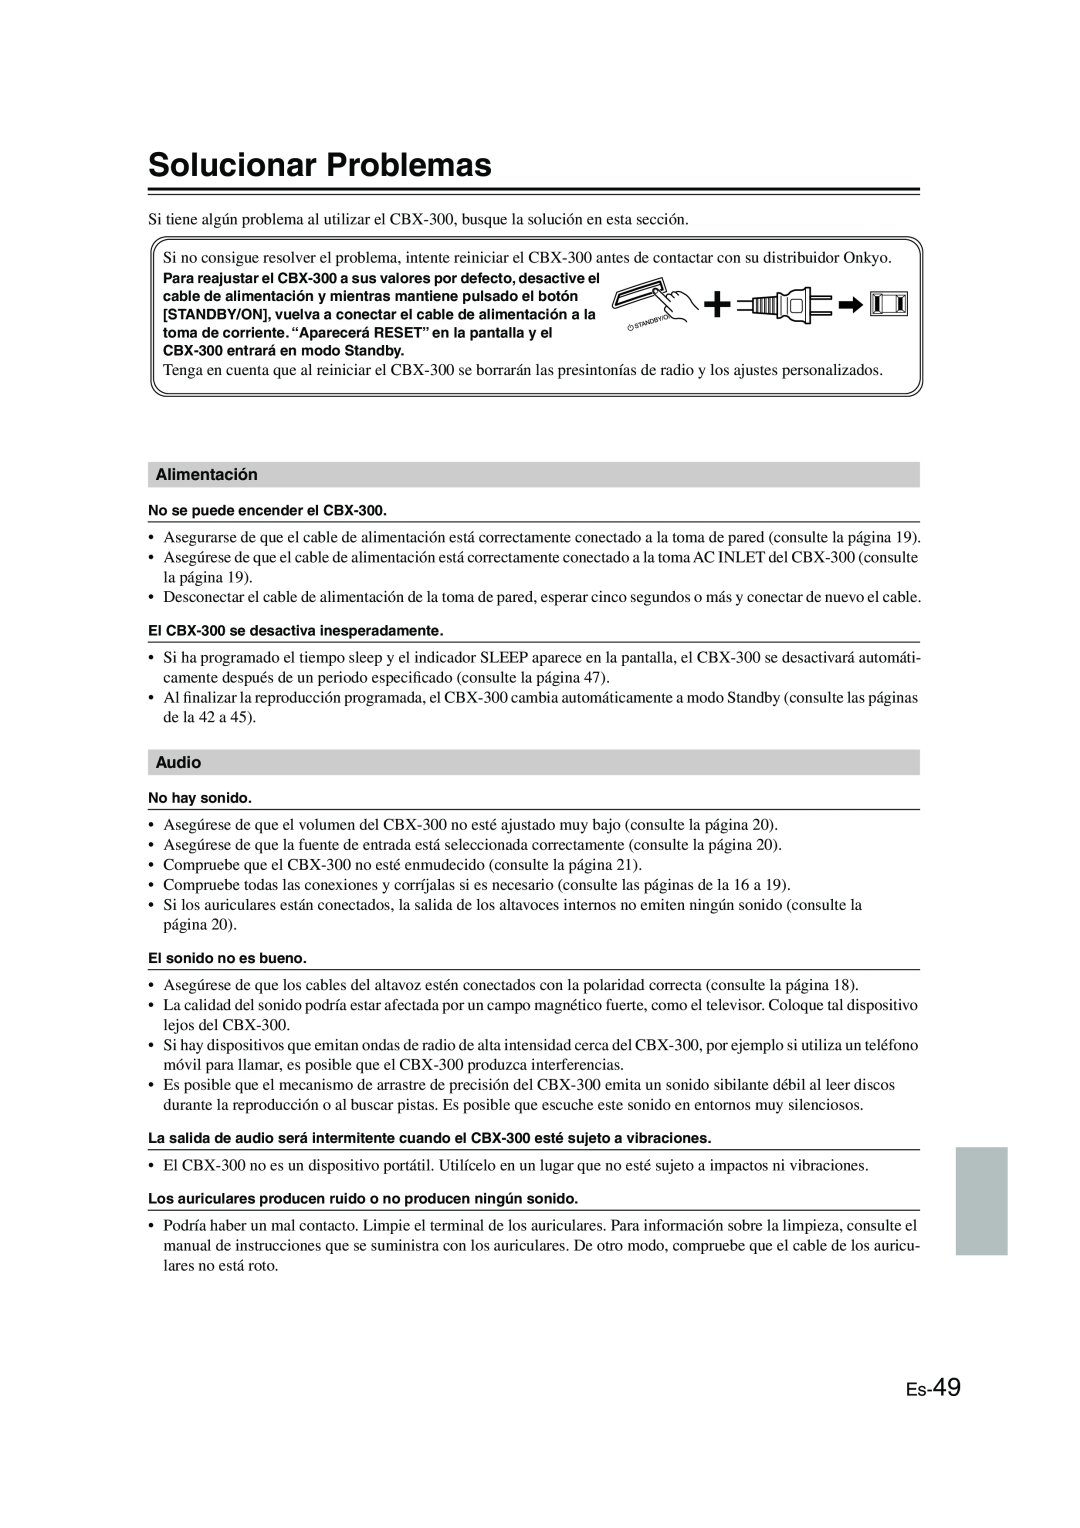 Onkyo CBX-300 instruction manual Solucionar Problemas, Es-49 